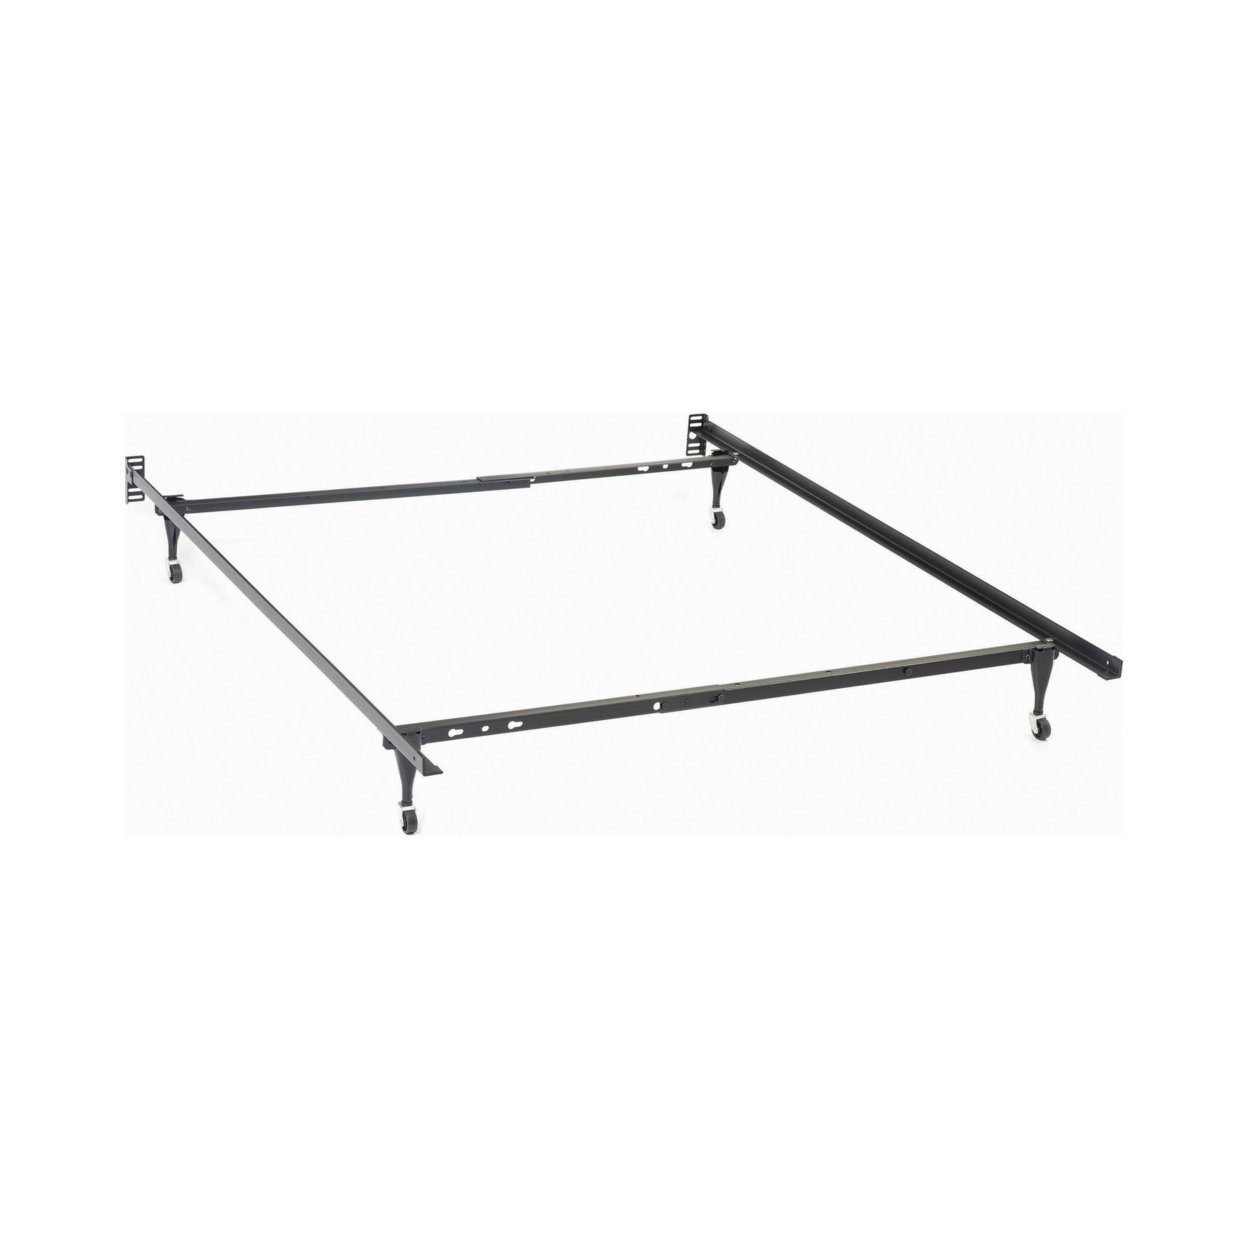 Nit Multisize Metal Bed Frame, Twin Or Full Size, Caster Wheels, Black- Saltoro Sherpi